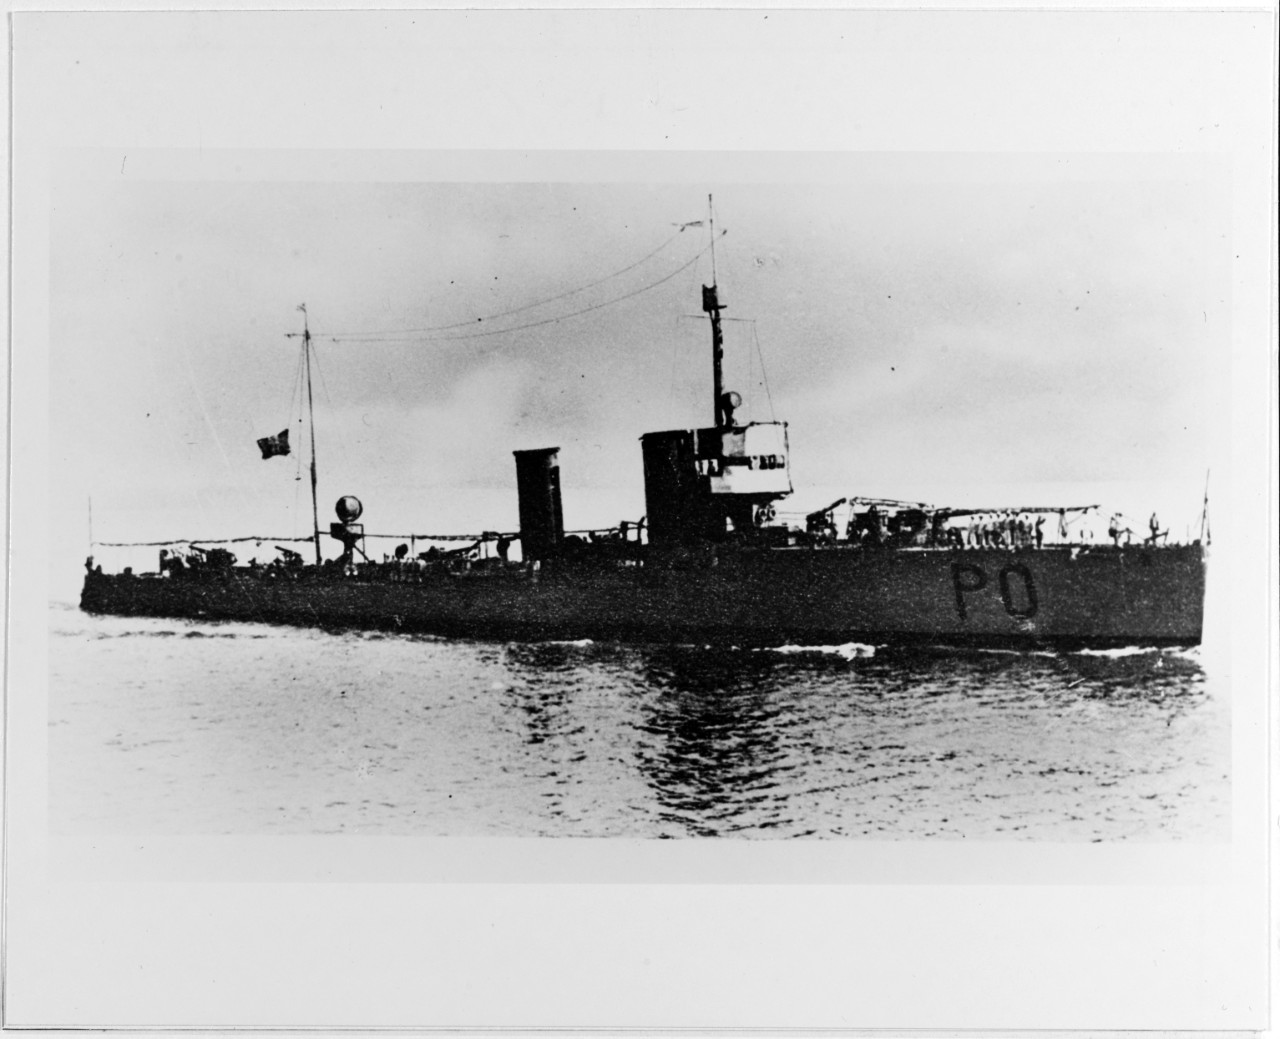 ALESSANDRO POERIO (Italian Destroyer, 1914-1949)